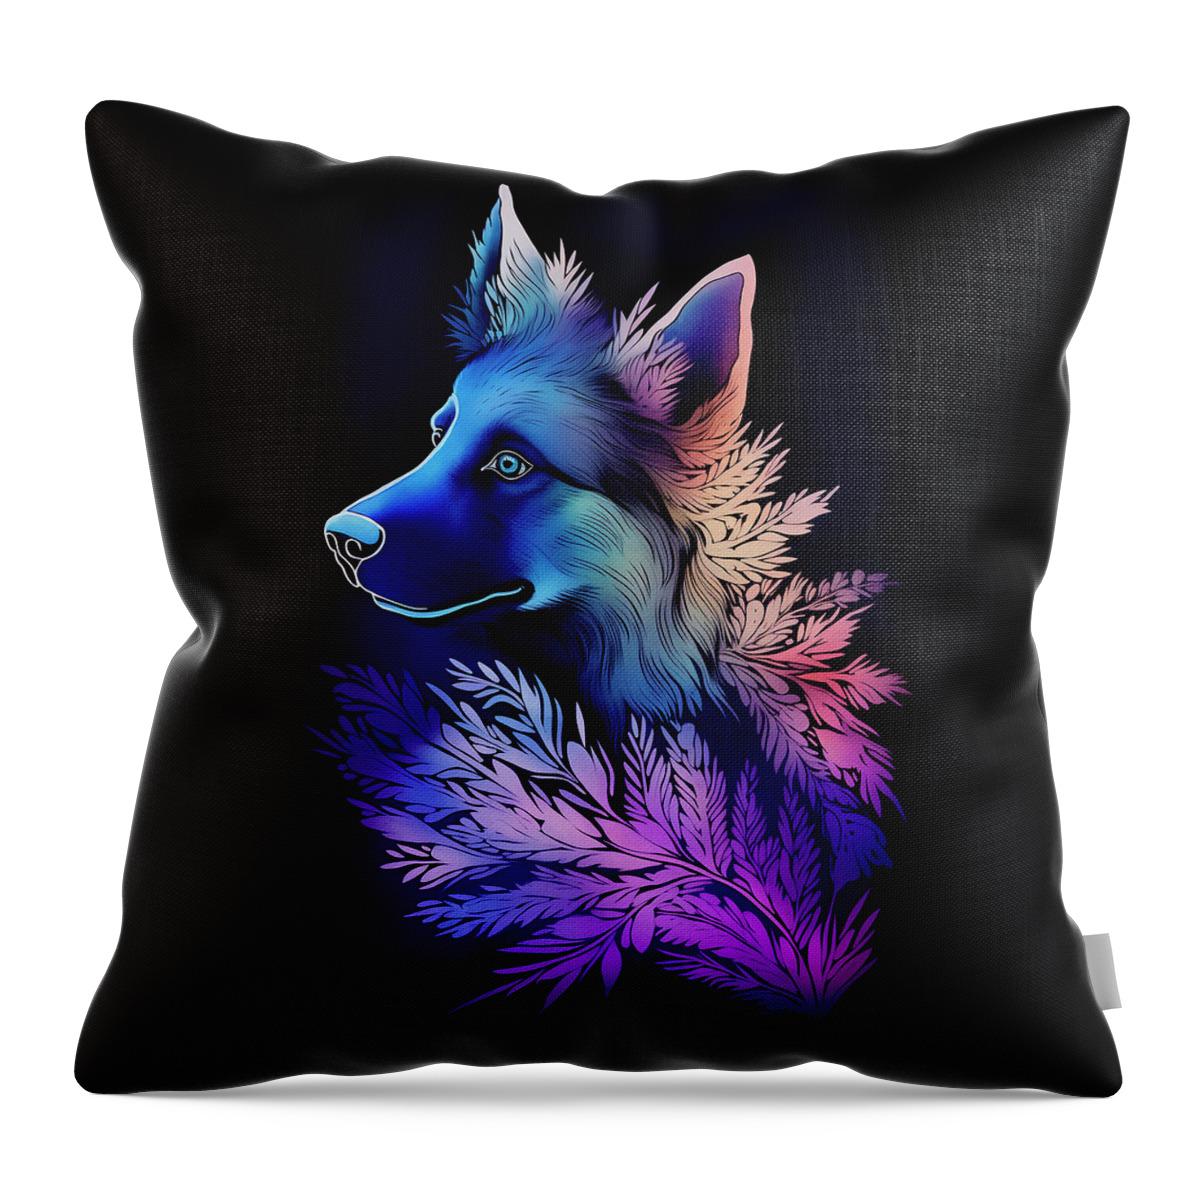 German Shepherd Dog Throw Pillow featuring the digital art Colorful Art Of A German Shepherd 2 by Angie Tirado